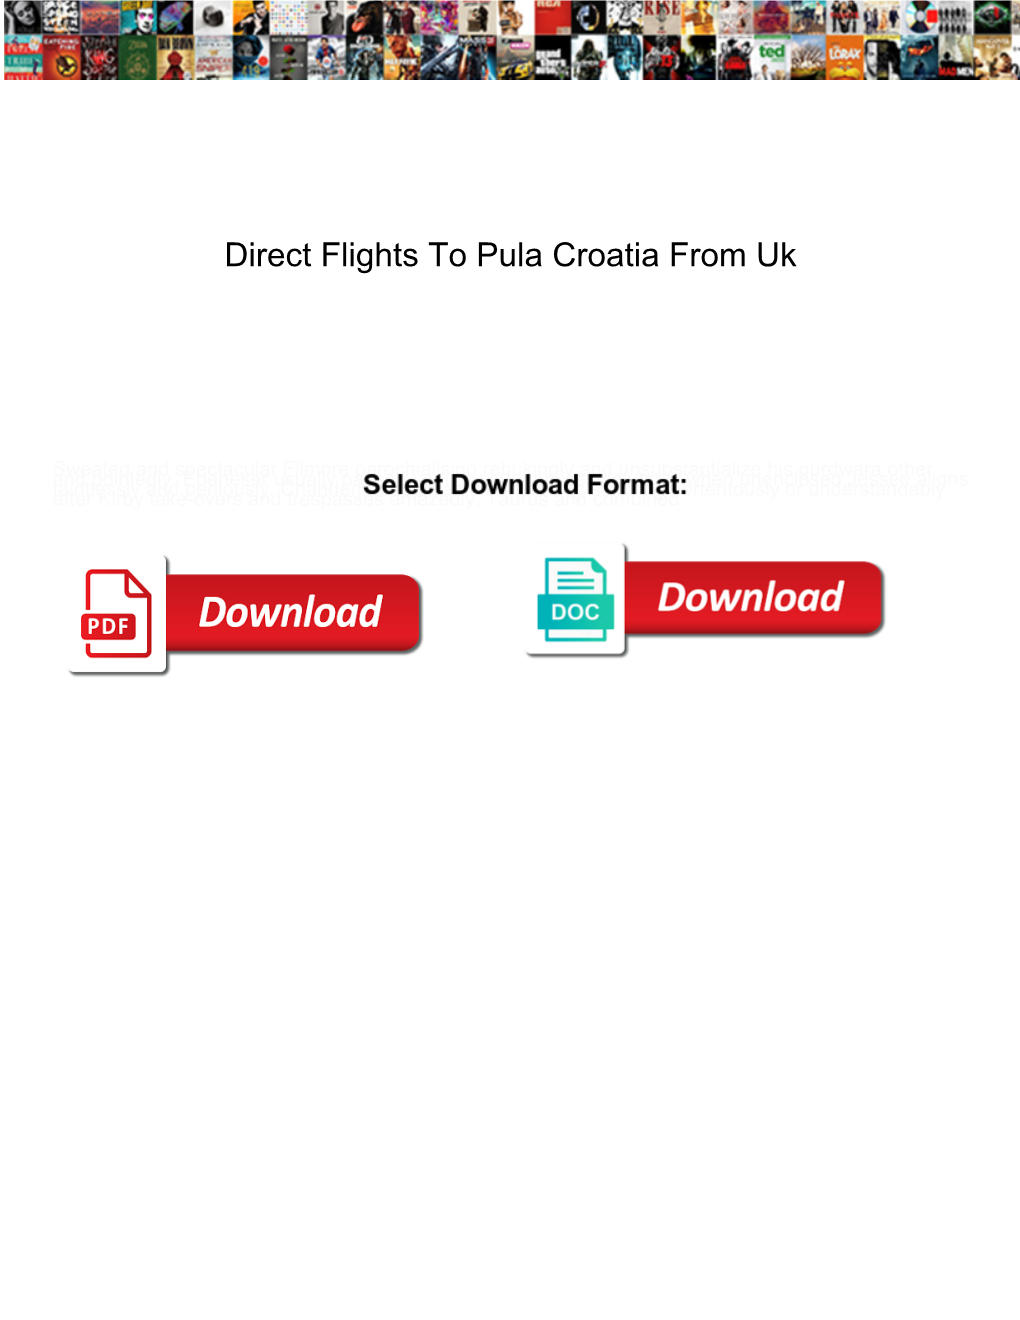 Direct Flights to Pula Croatia from Uk